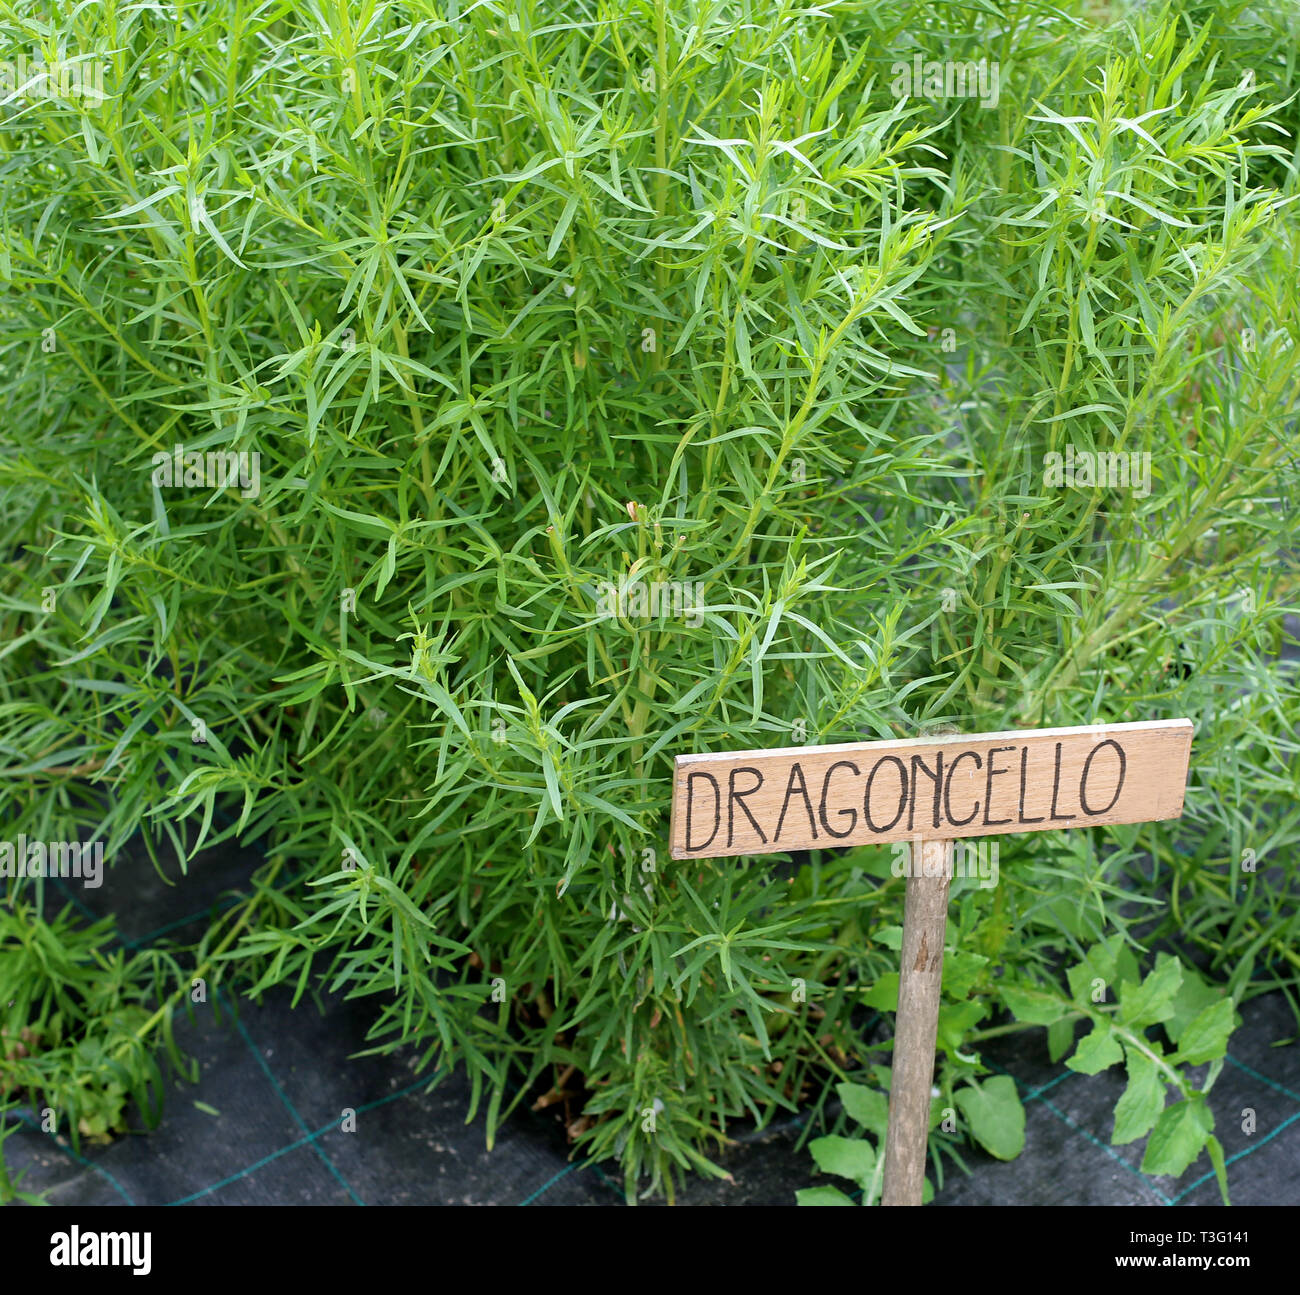 plants of green TARRAGON called Dragoncello in Italian Language Stock Photo